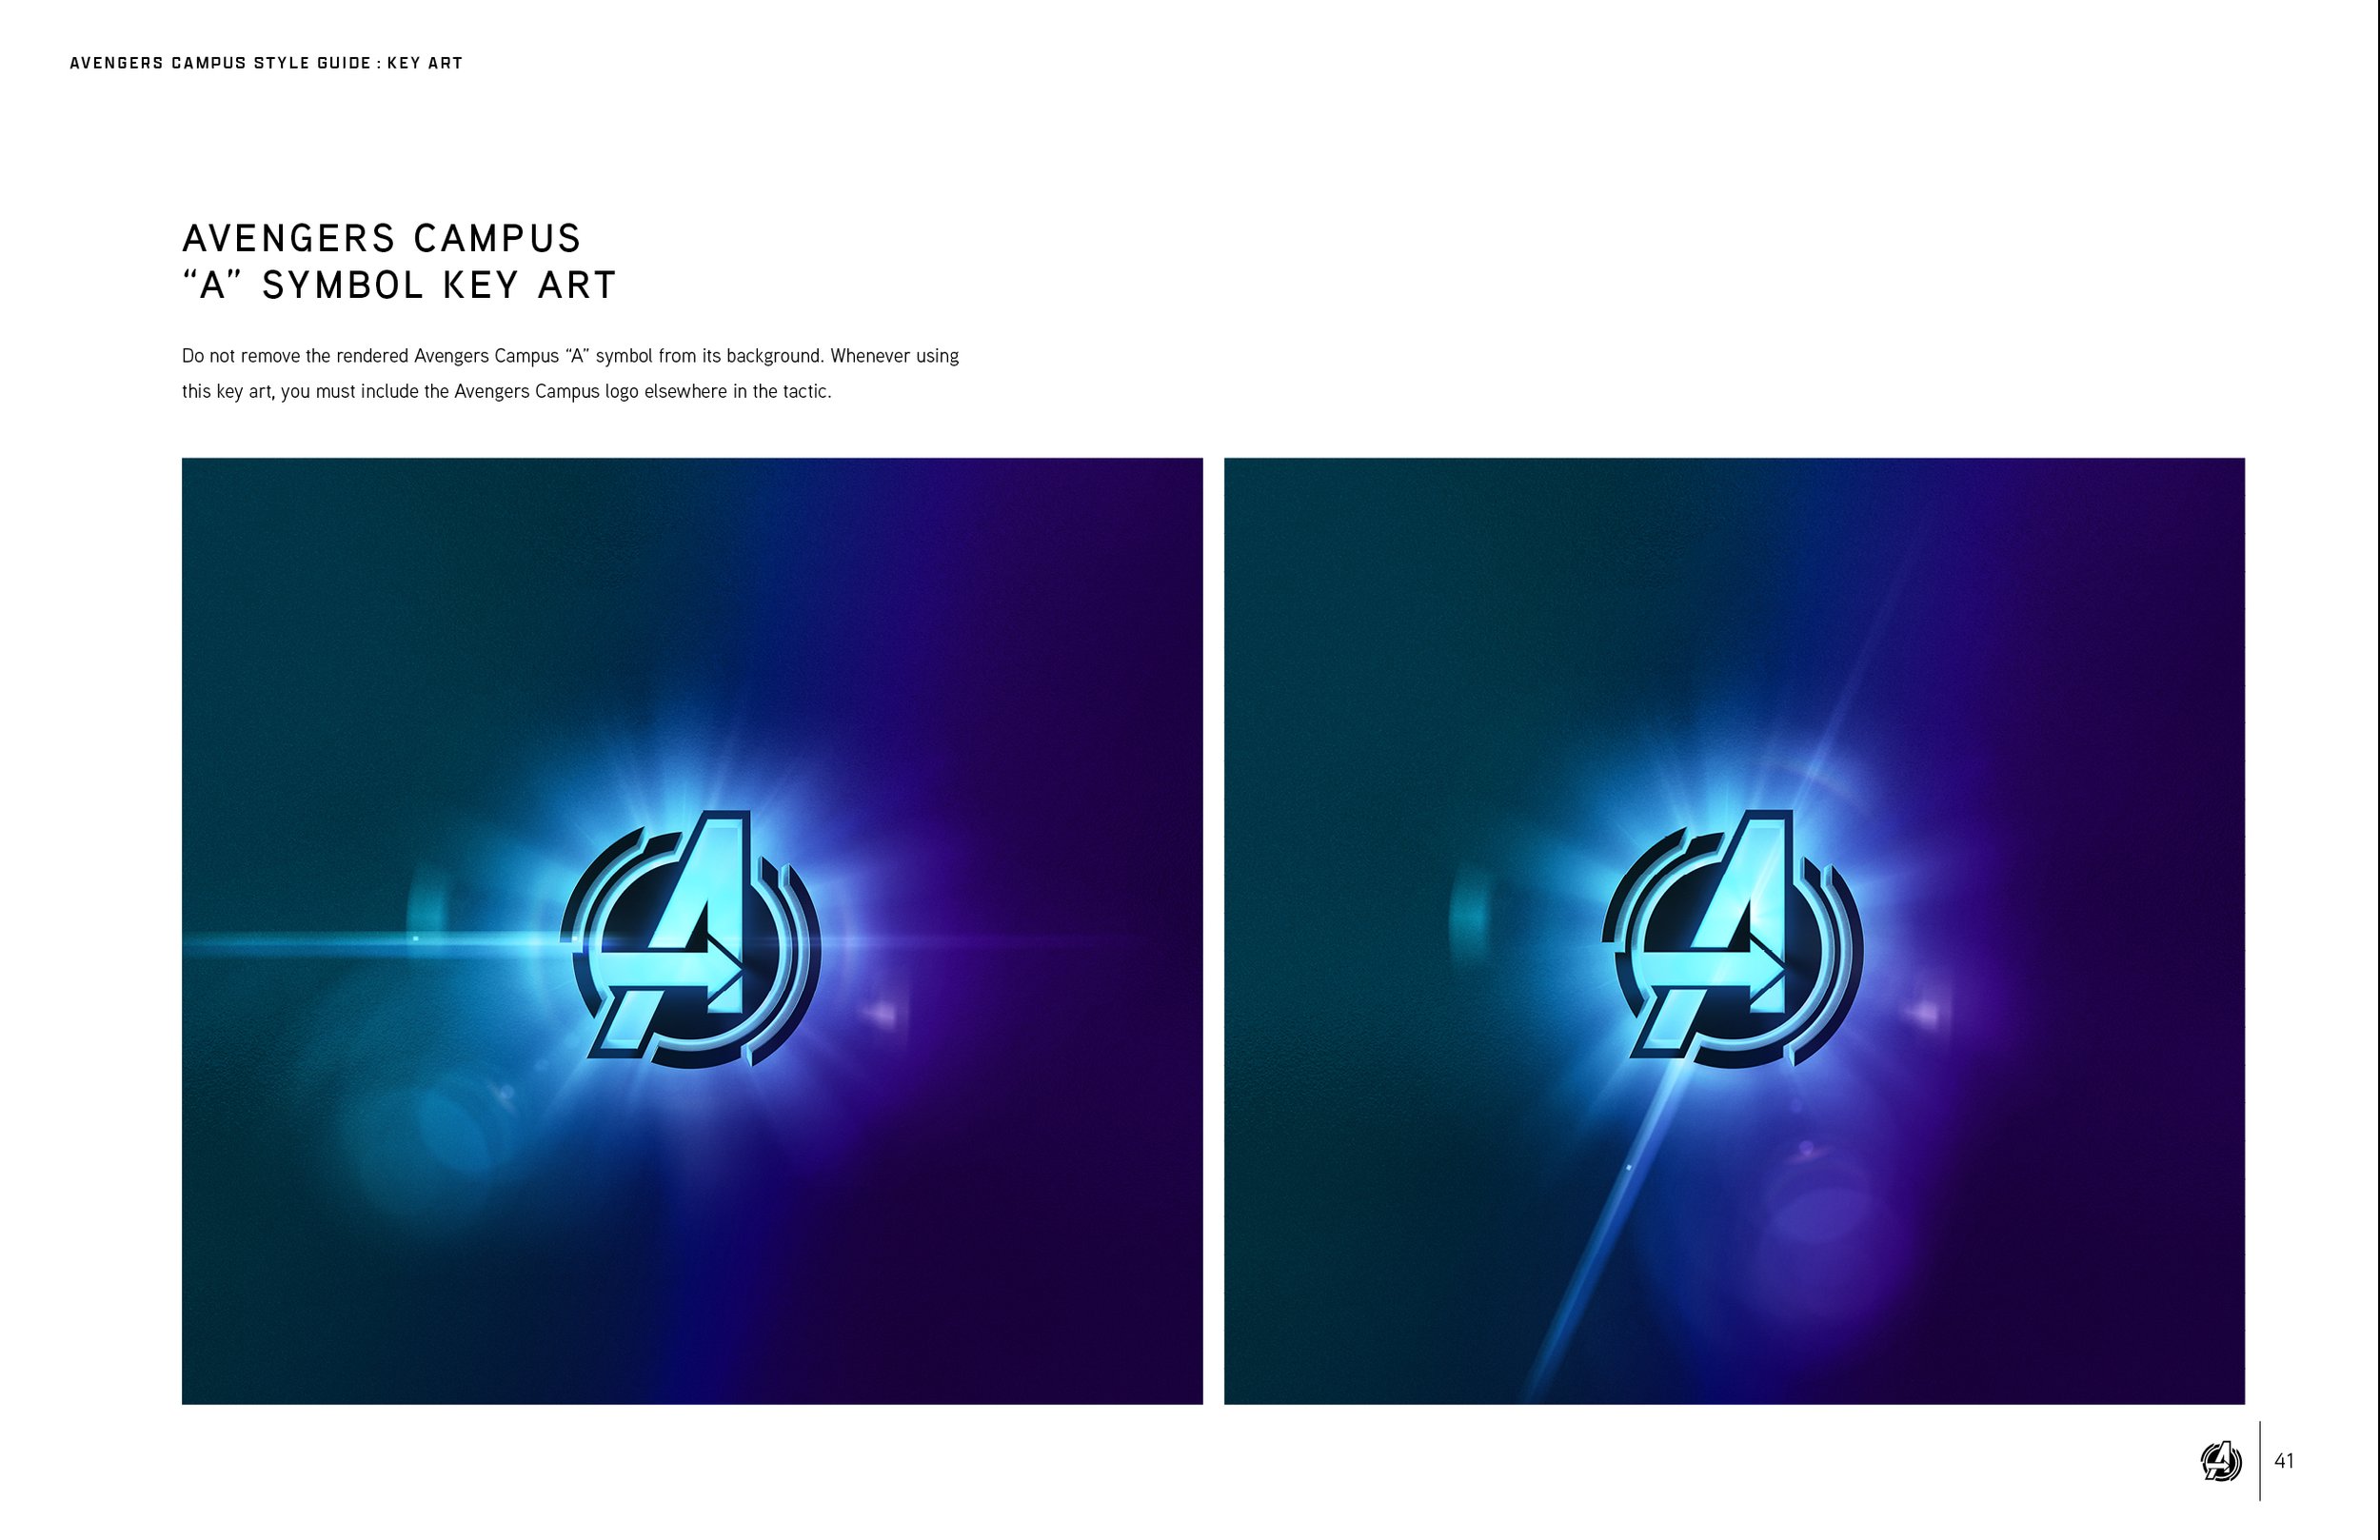 AvengersCampus_StyleGuide_Website_41.jpg